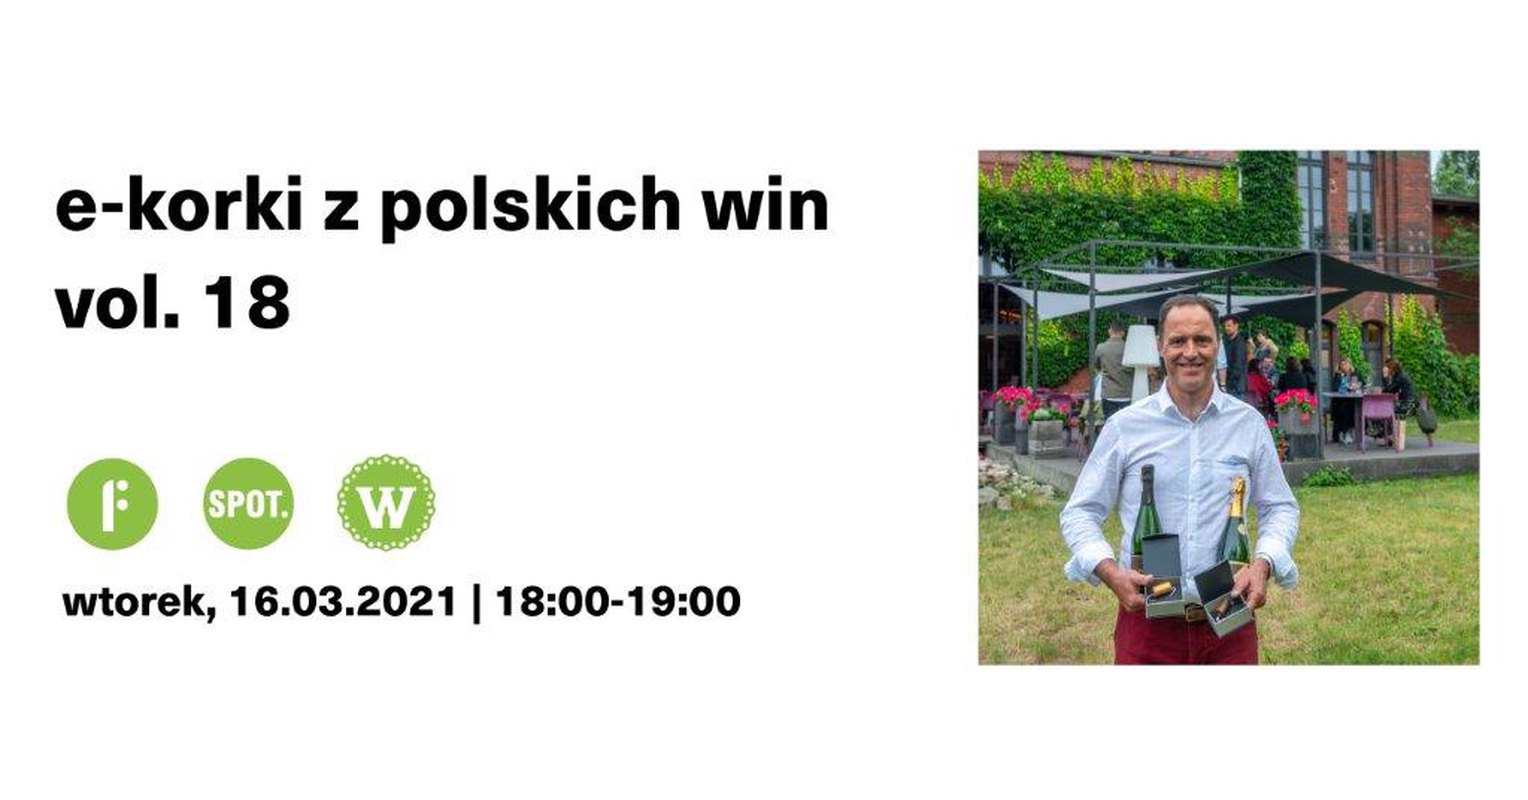 E-korki z polskich win vol. 18